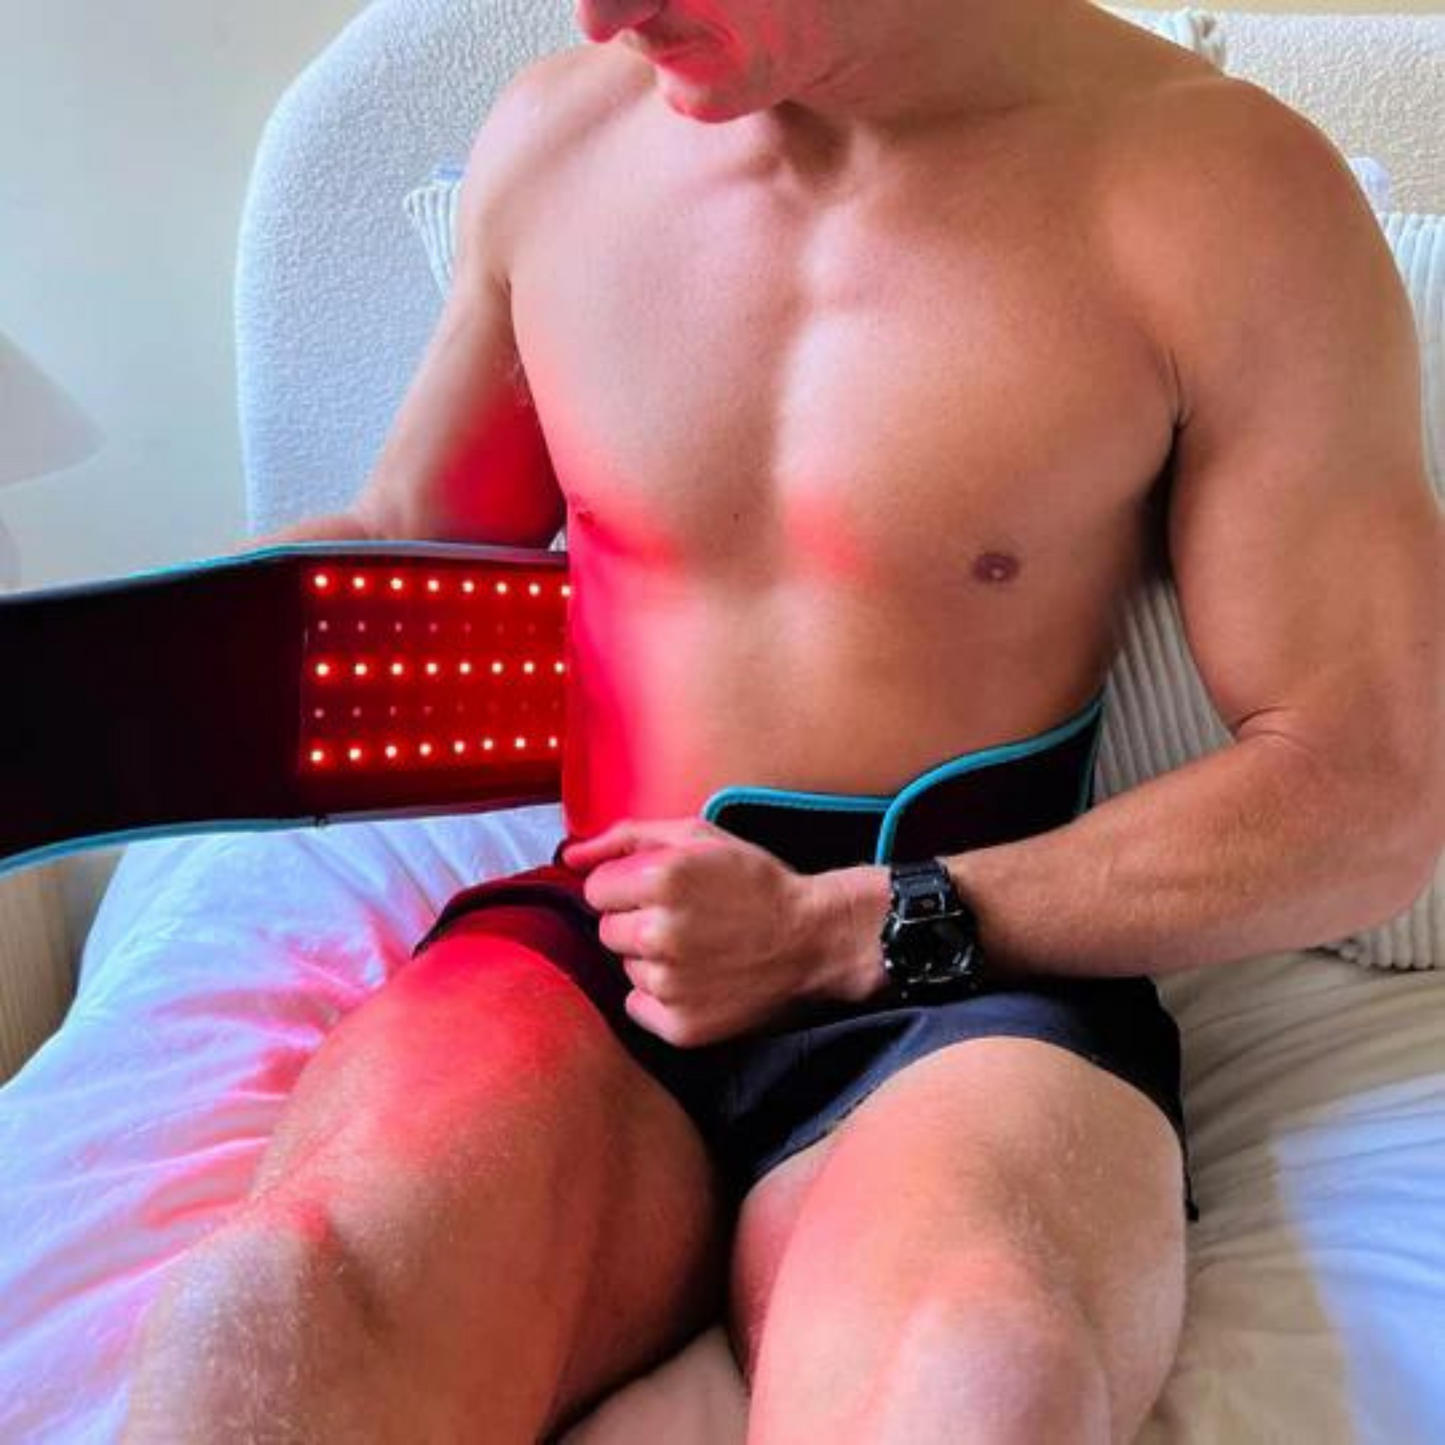 LumaBelt™ Red Light Therapy Belt